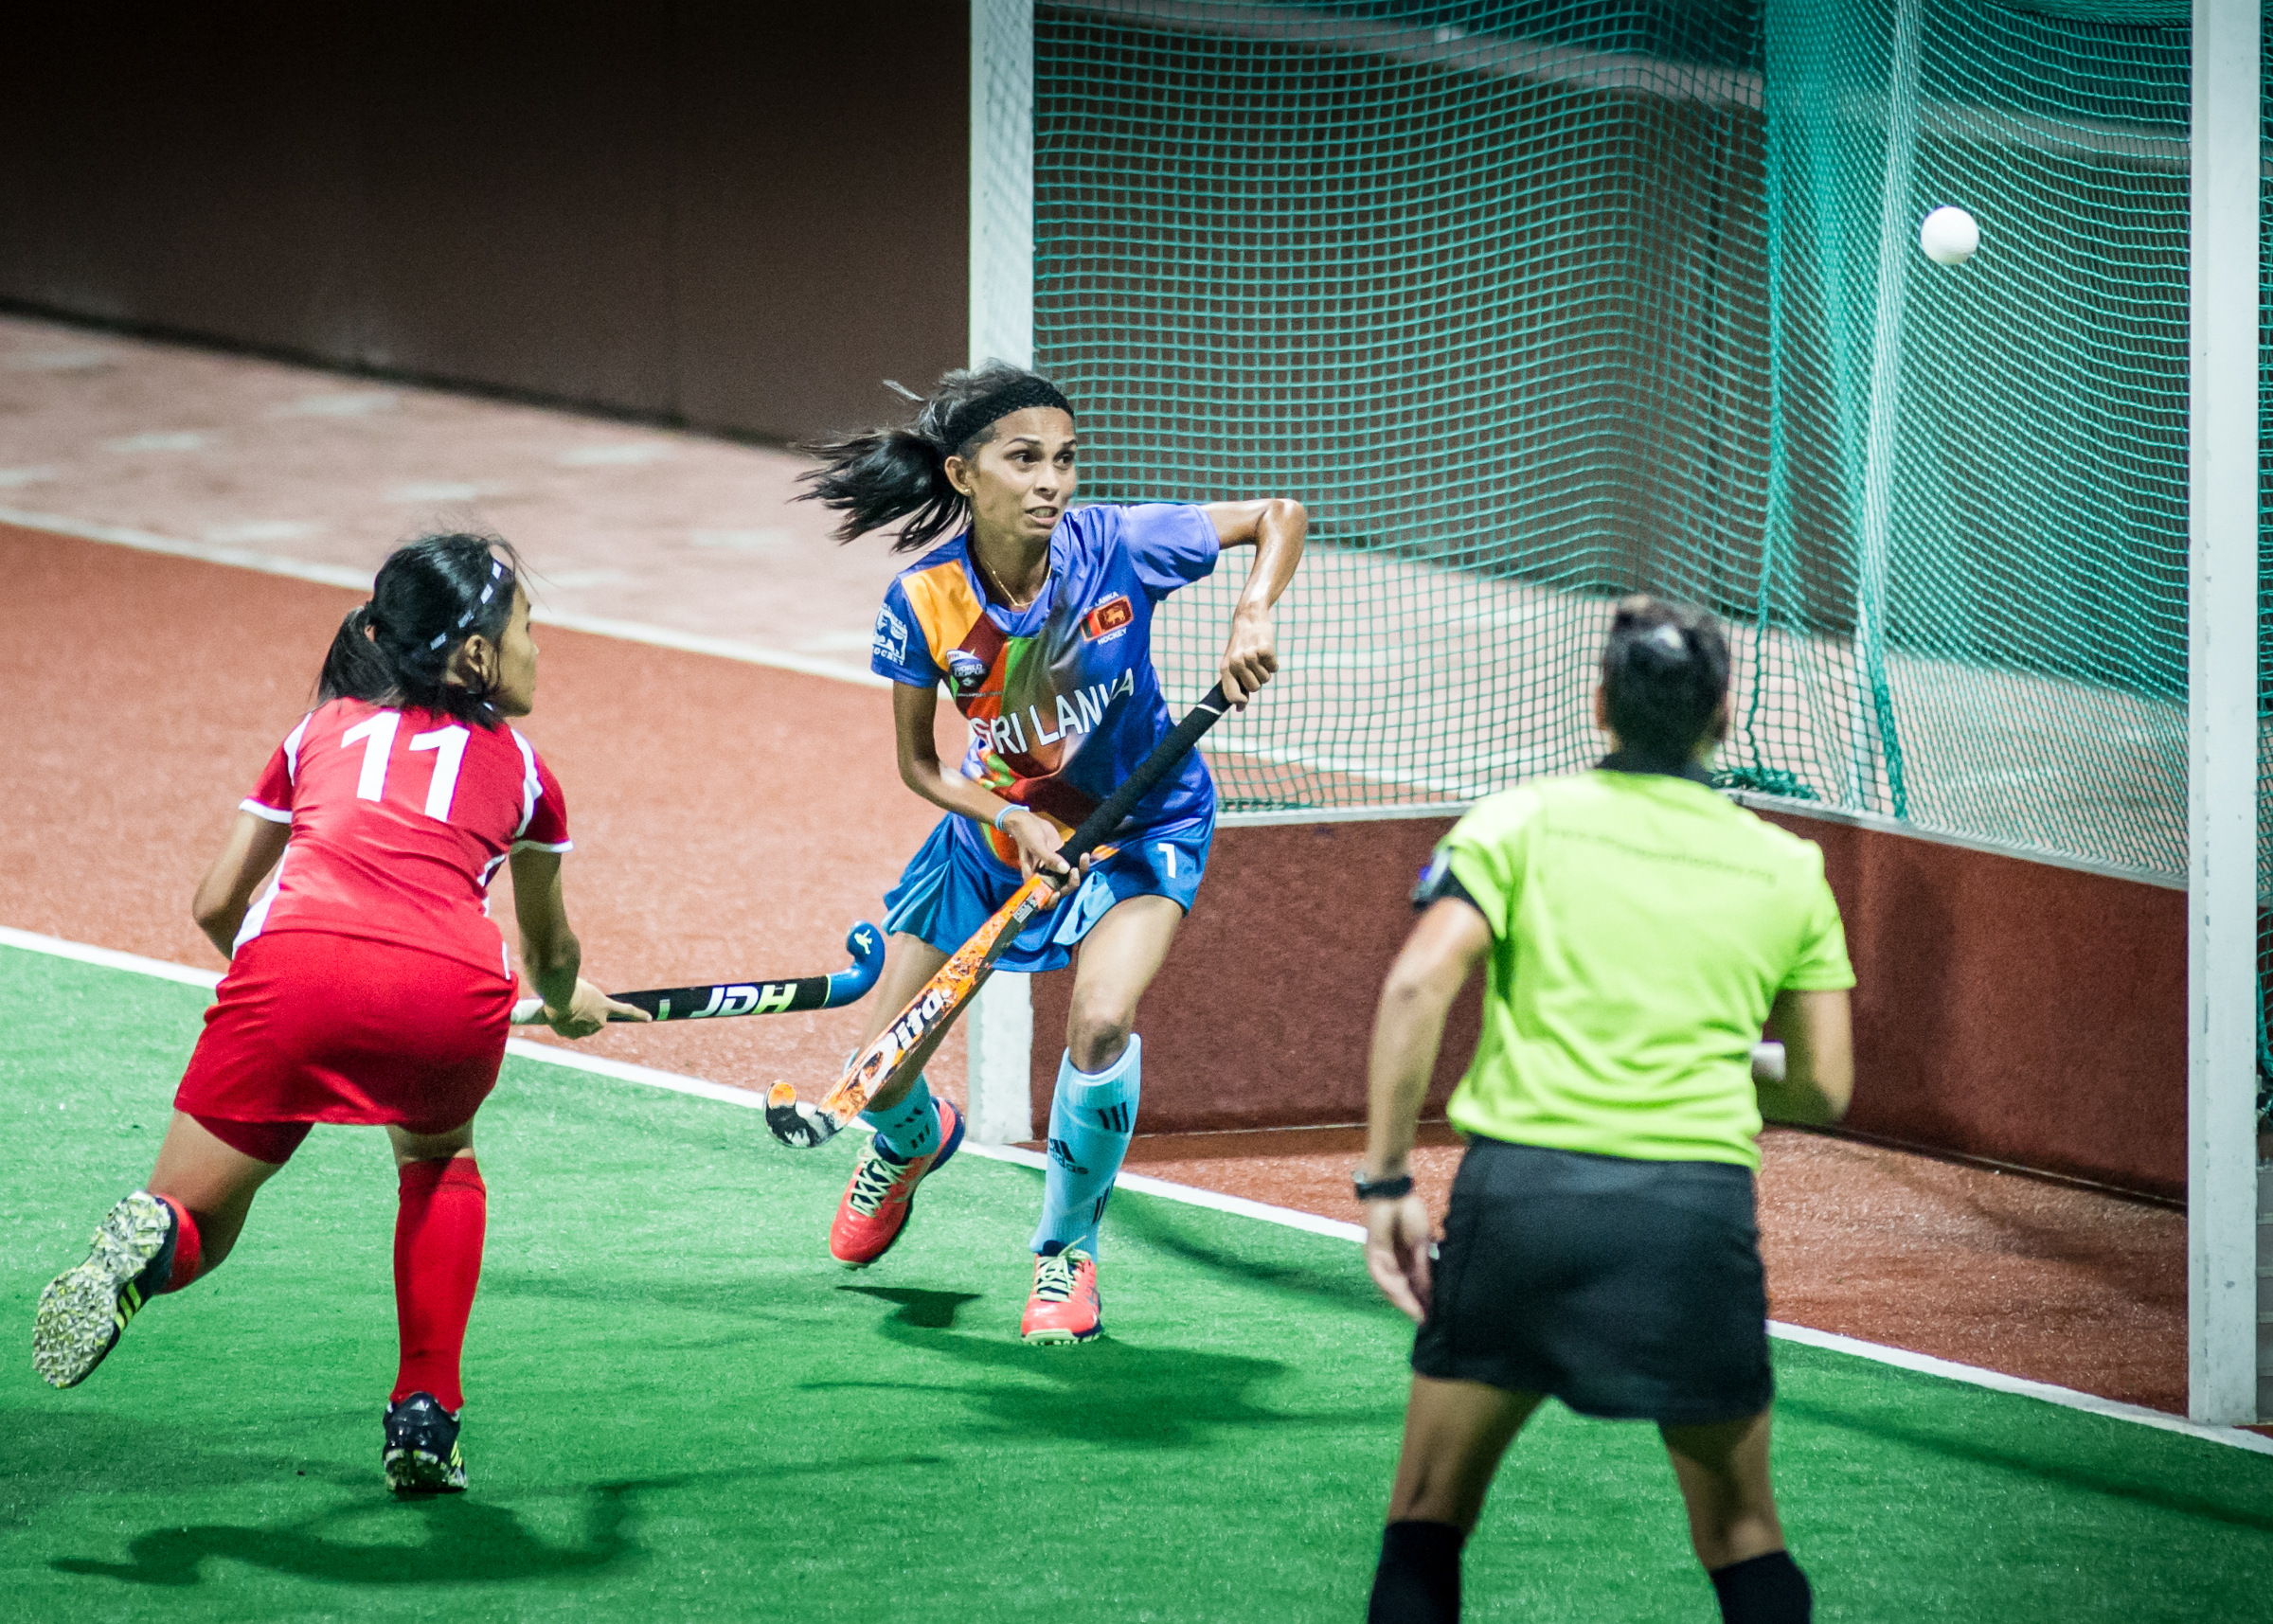 A Singaporean player scores against Sri Lanka during a World Hockey League match at the Sengkang Sports Complex.